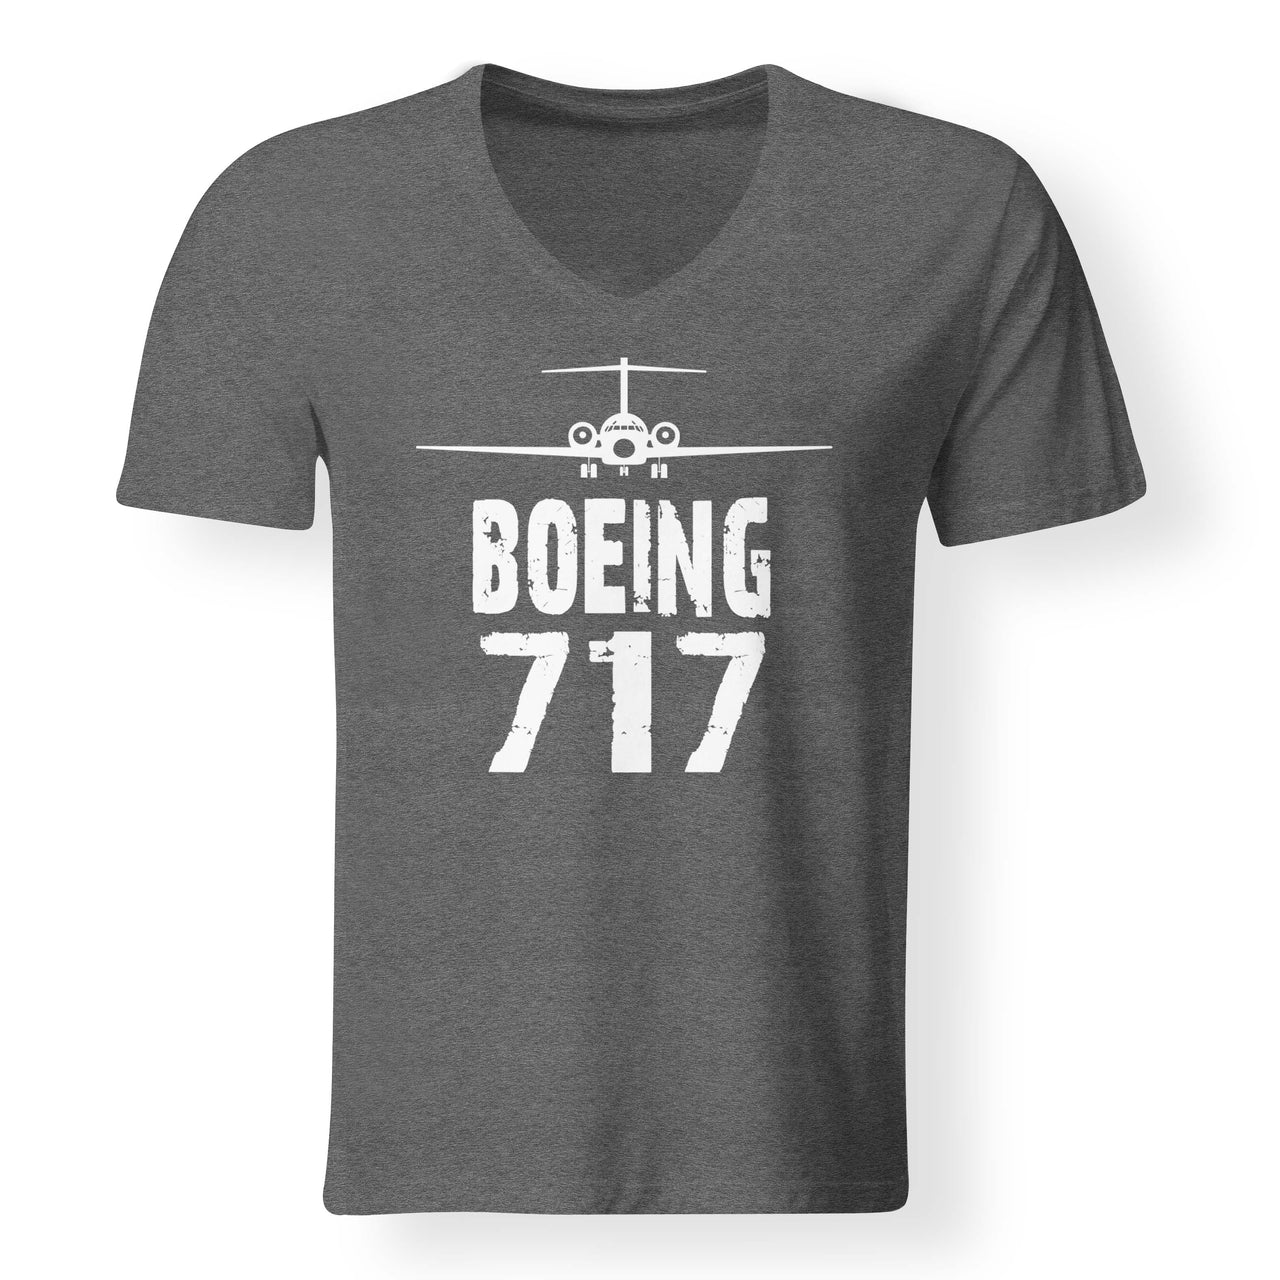 Boeing 717 & Plane Designed V-Neck T-Shirts